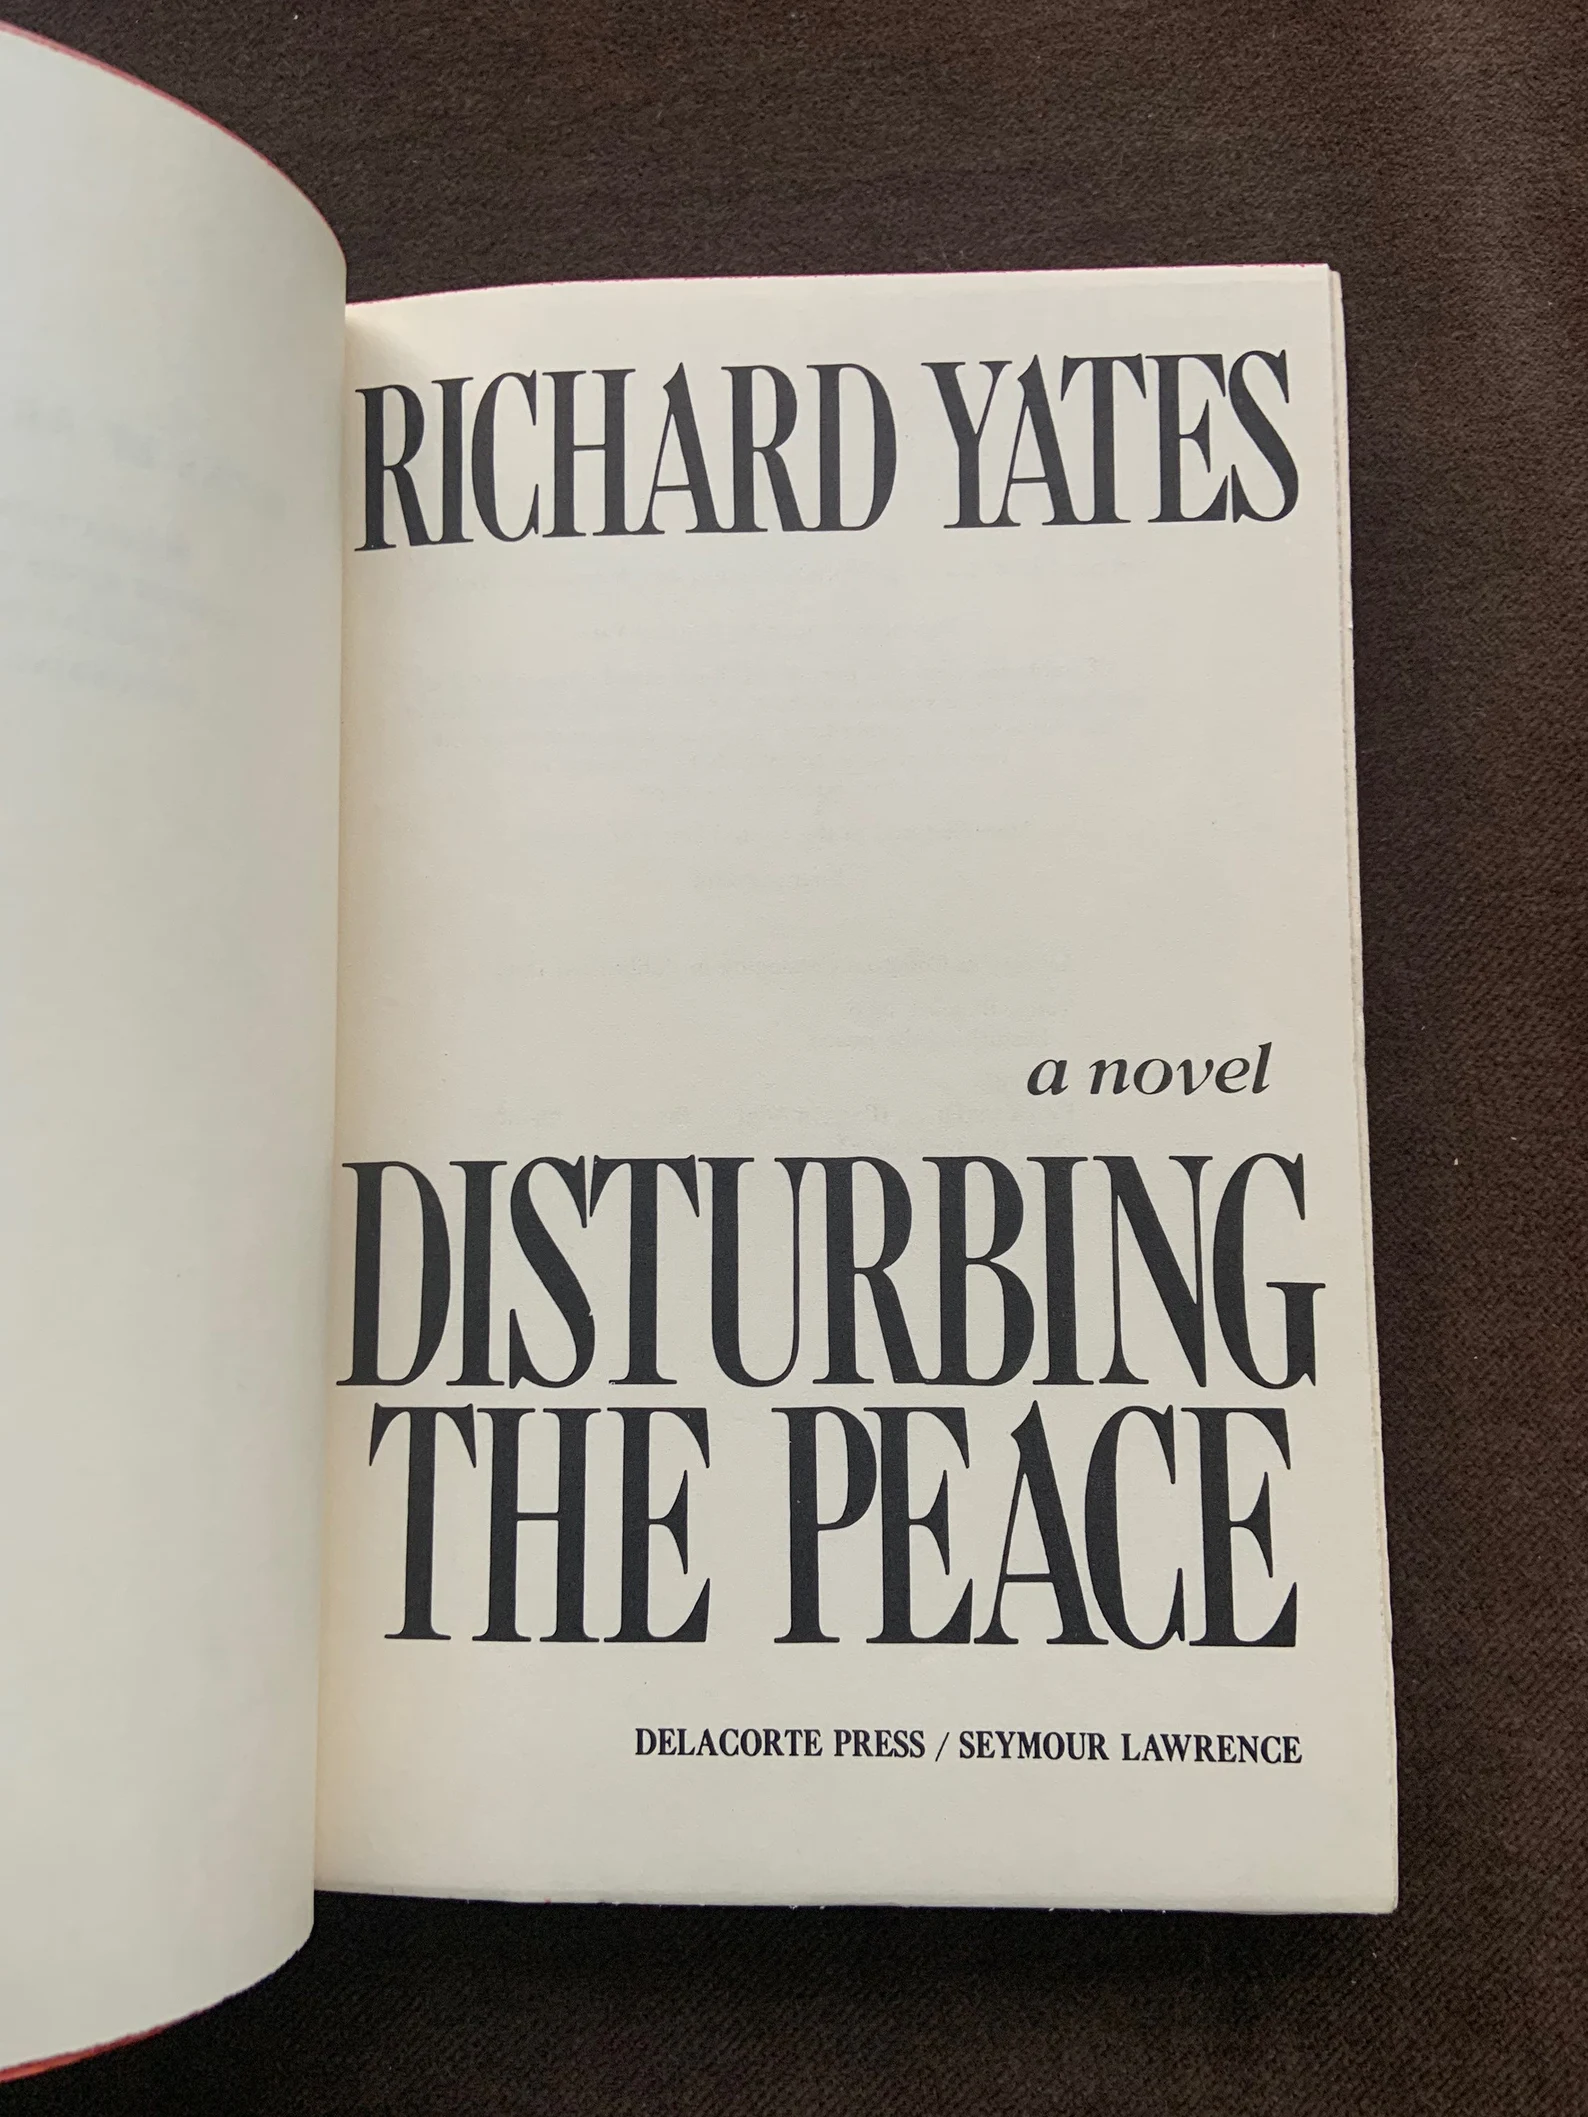 Disturbing the Peace (1975) by Richard Yates